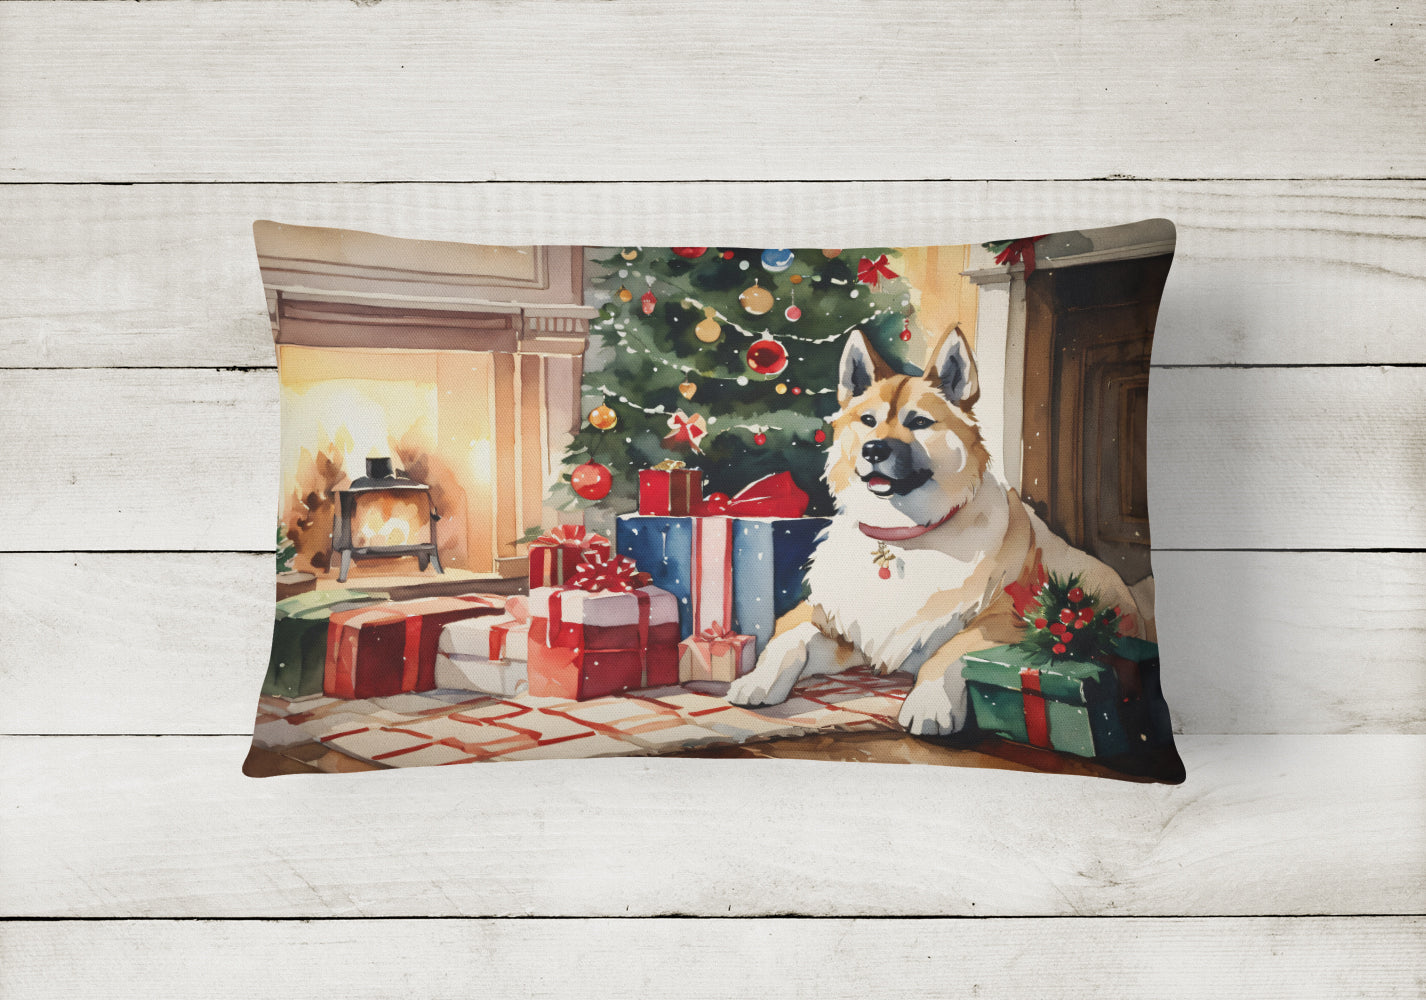 Buy this Akita Cozy Christmas Throw Pillow